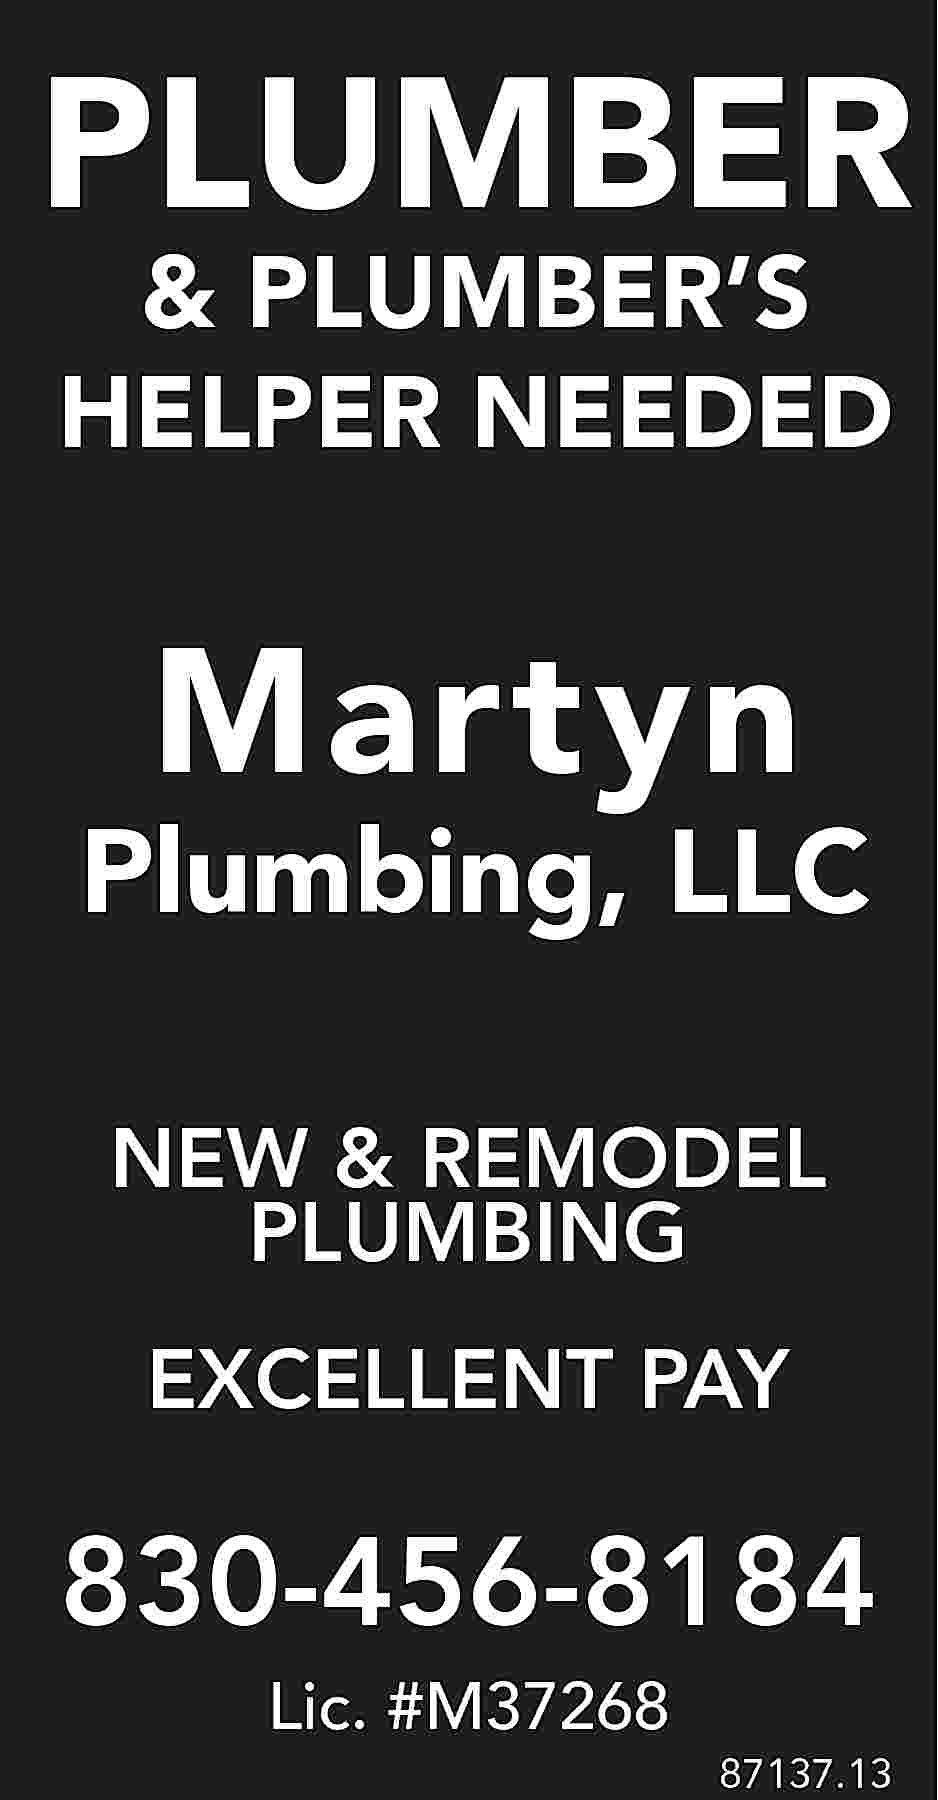 PLUMBER & PLUMBER’S HELPER NEEDED  PLUMBER & PLUMBER’S HELPER NEEDED Martyn Plumbing, LLC NEW & REMODEL PLUMBING EXCELLENT PAY 830-456-8184 Lic. #M37268 87137.13